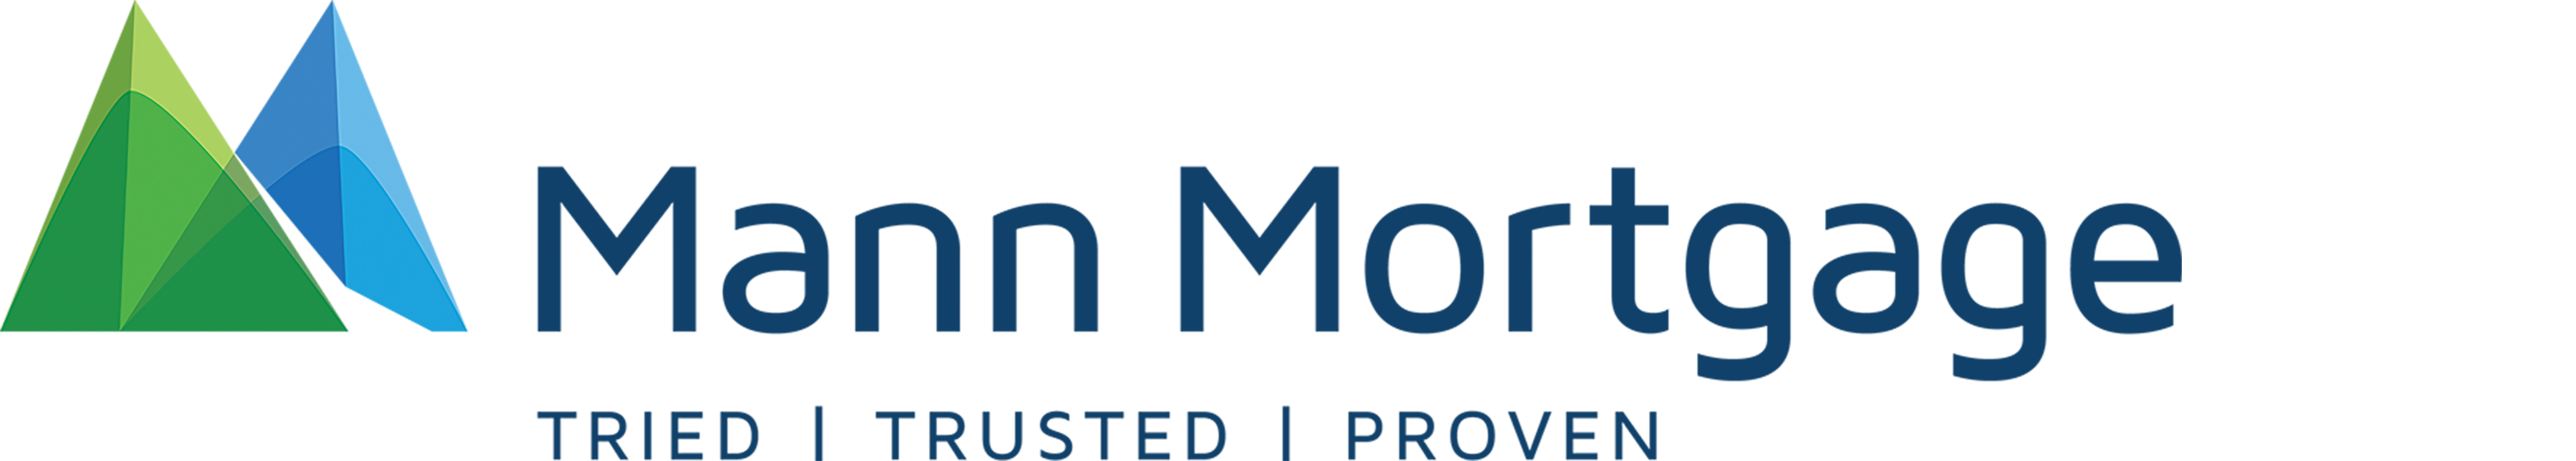 Mann Mortgage logo